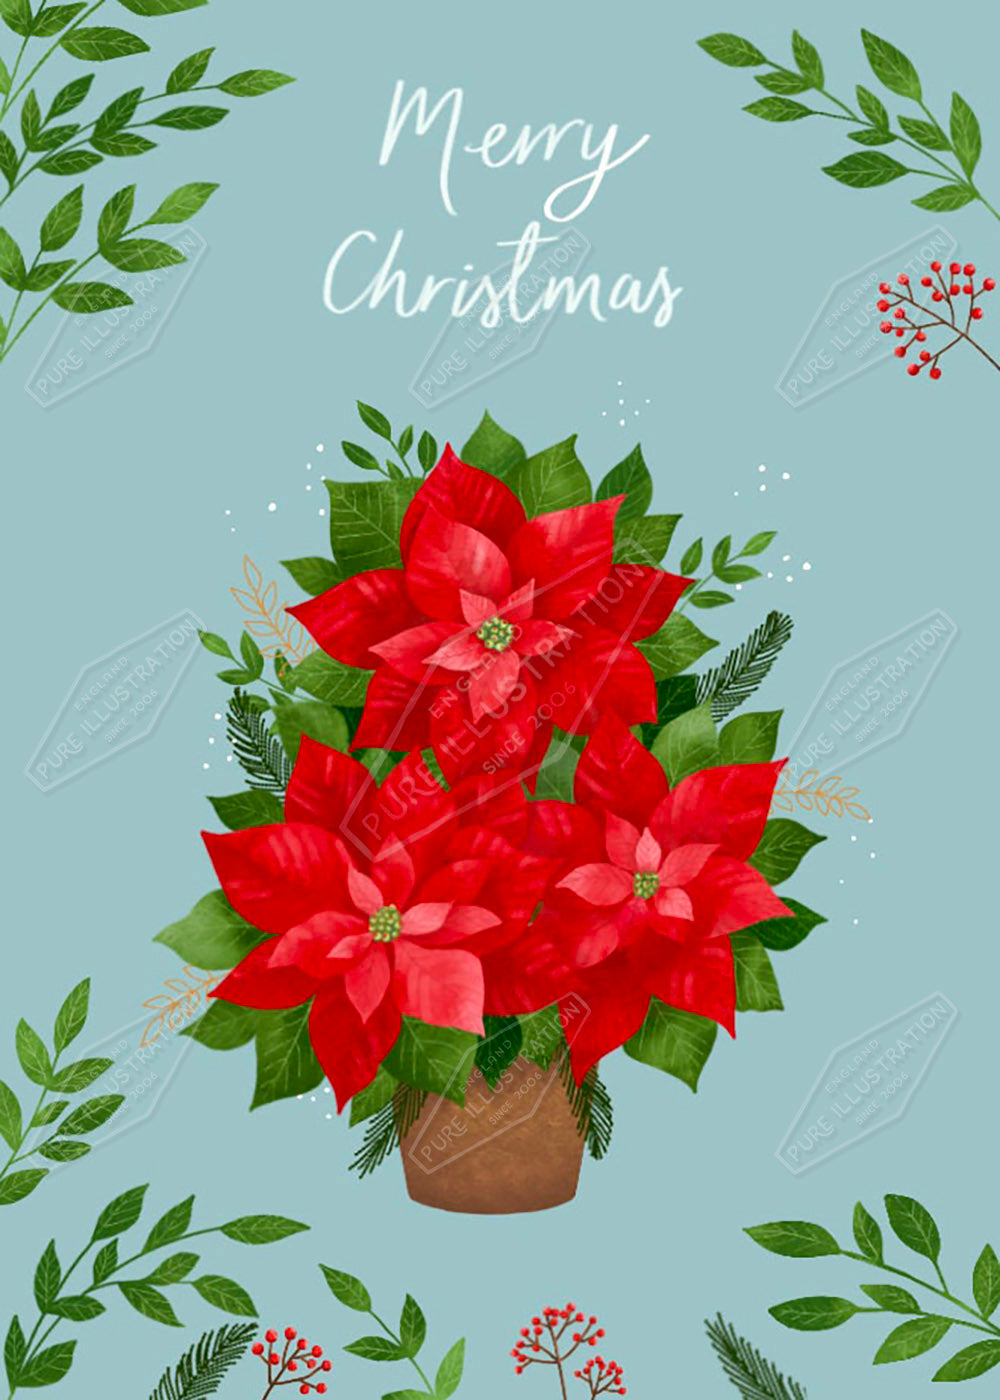 00034628AAI - Pure Art Licensing Agency - Ponsettia Christmas Card Design by Anna Aitken